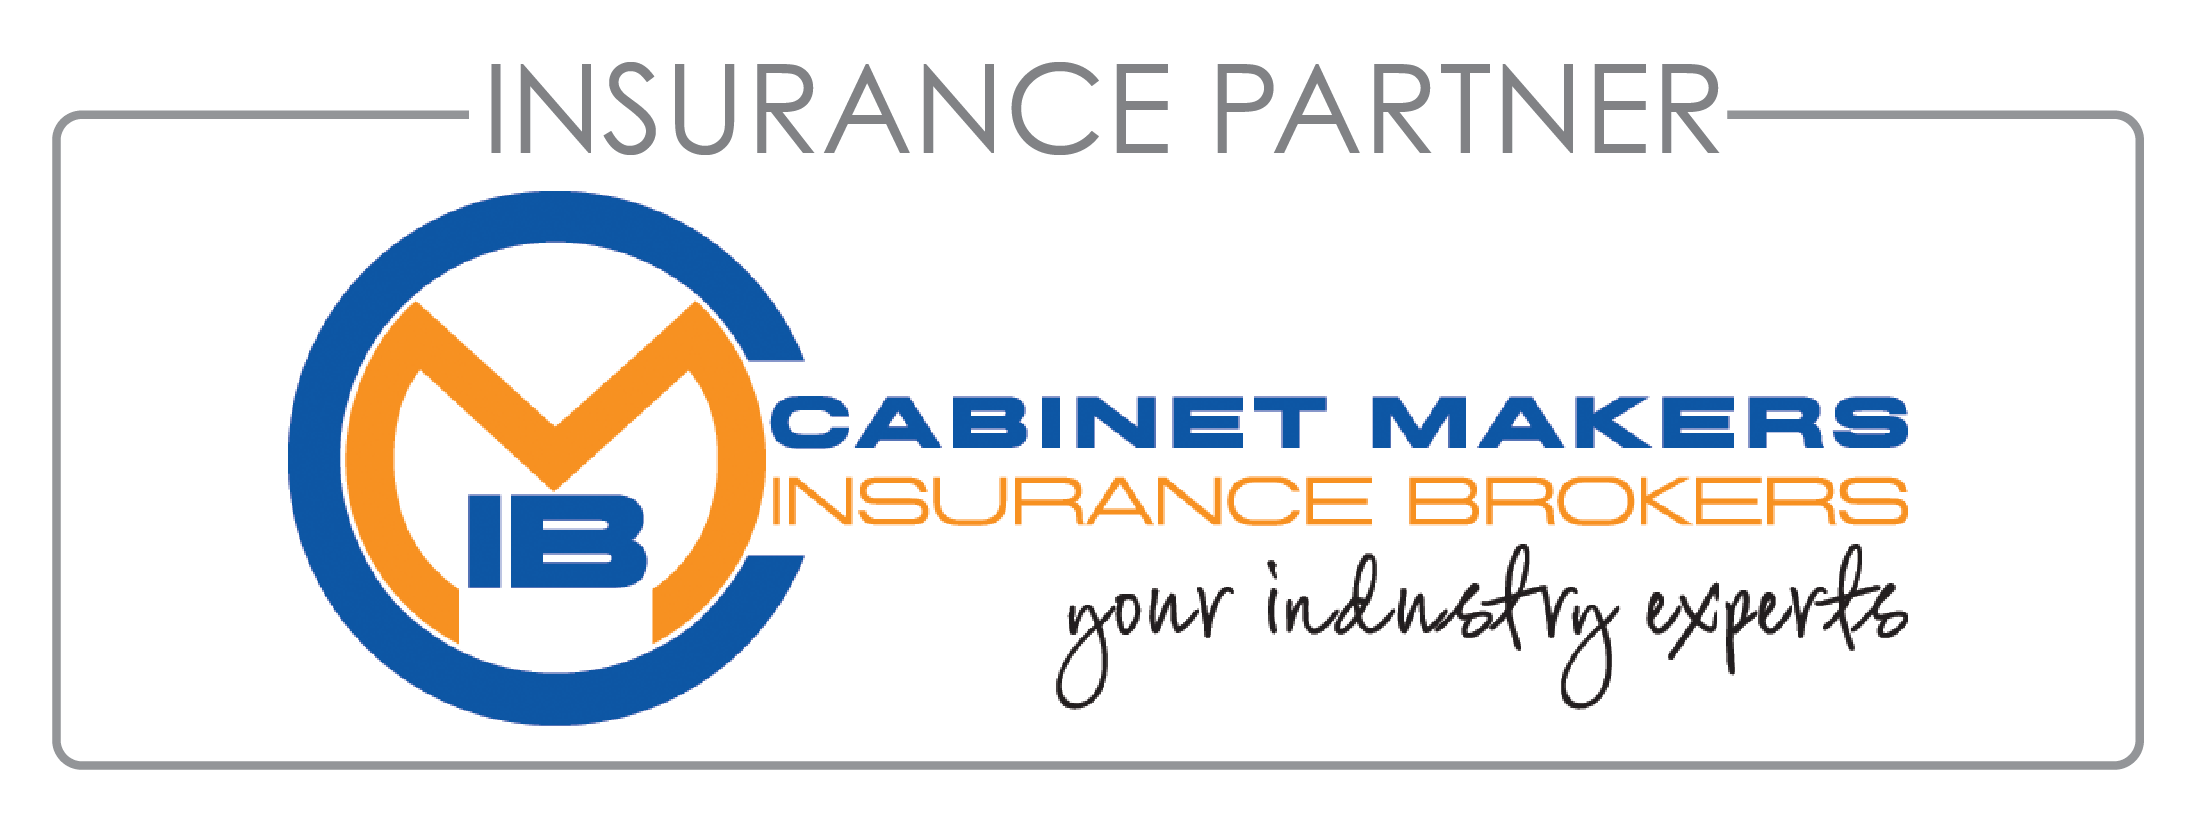 KBDI Insurance Partner CMIB